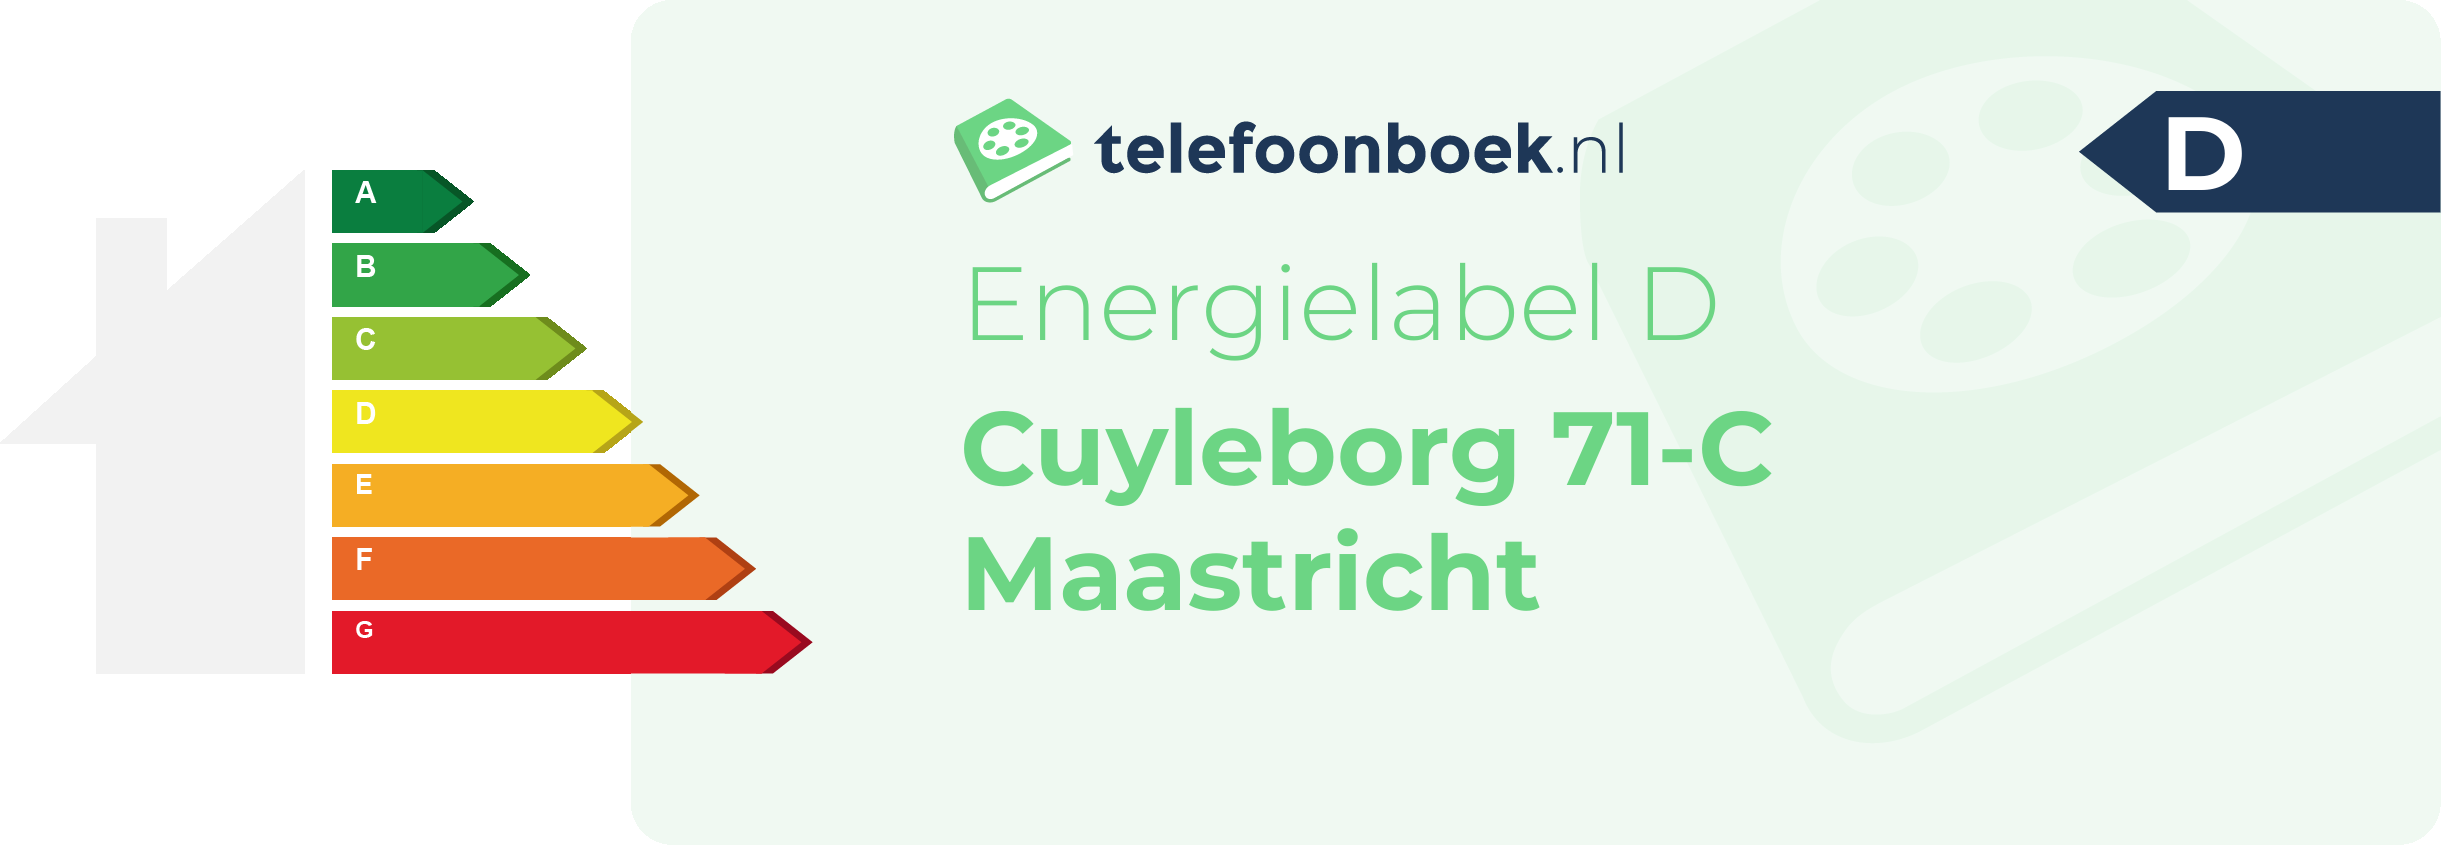 Energielabel Cuyleborg 71-C Maastricht